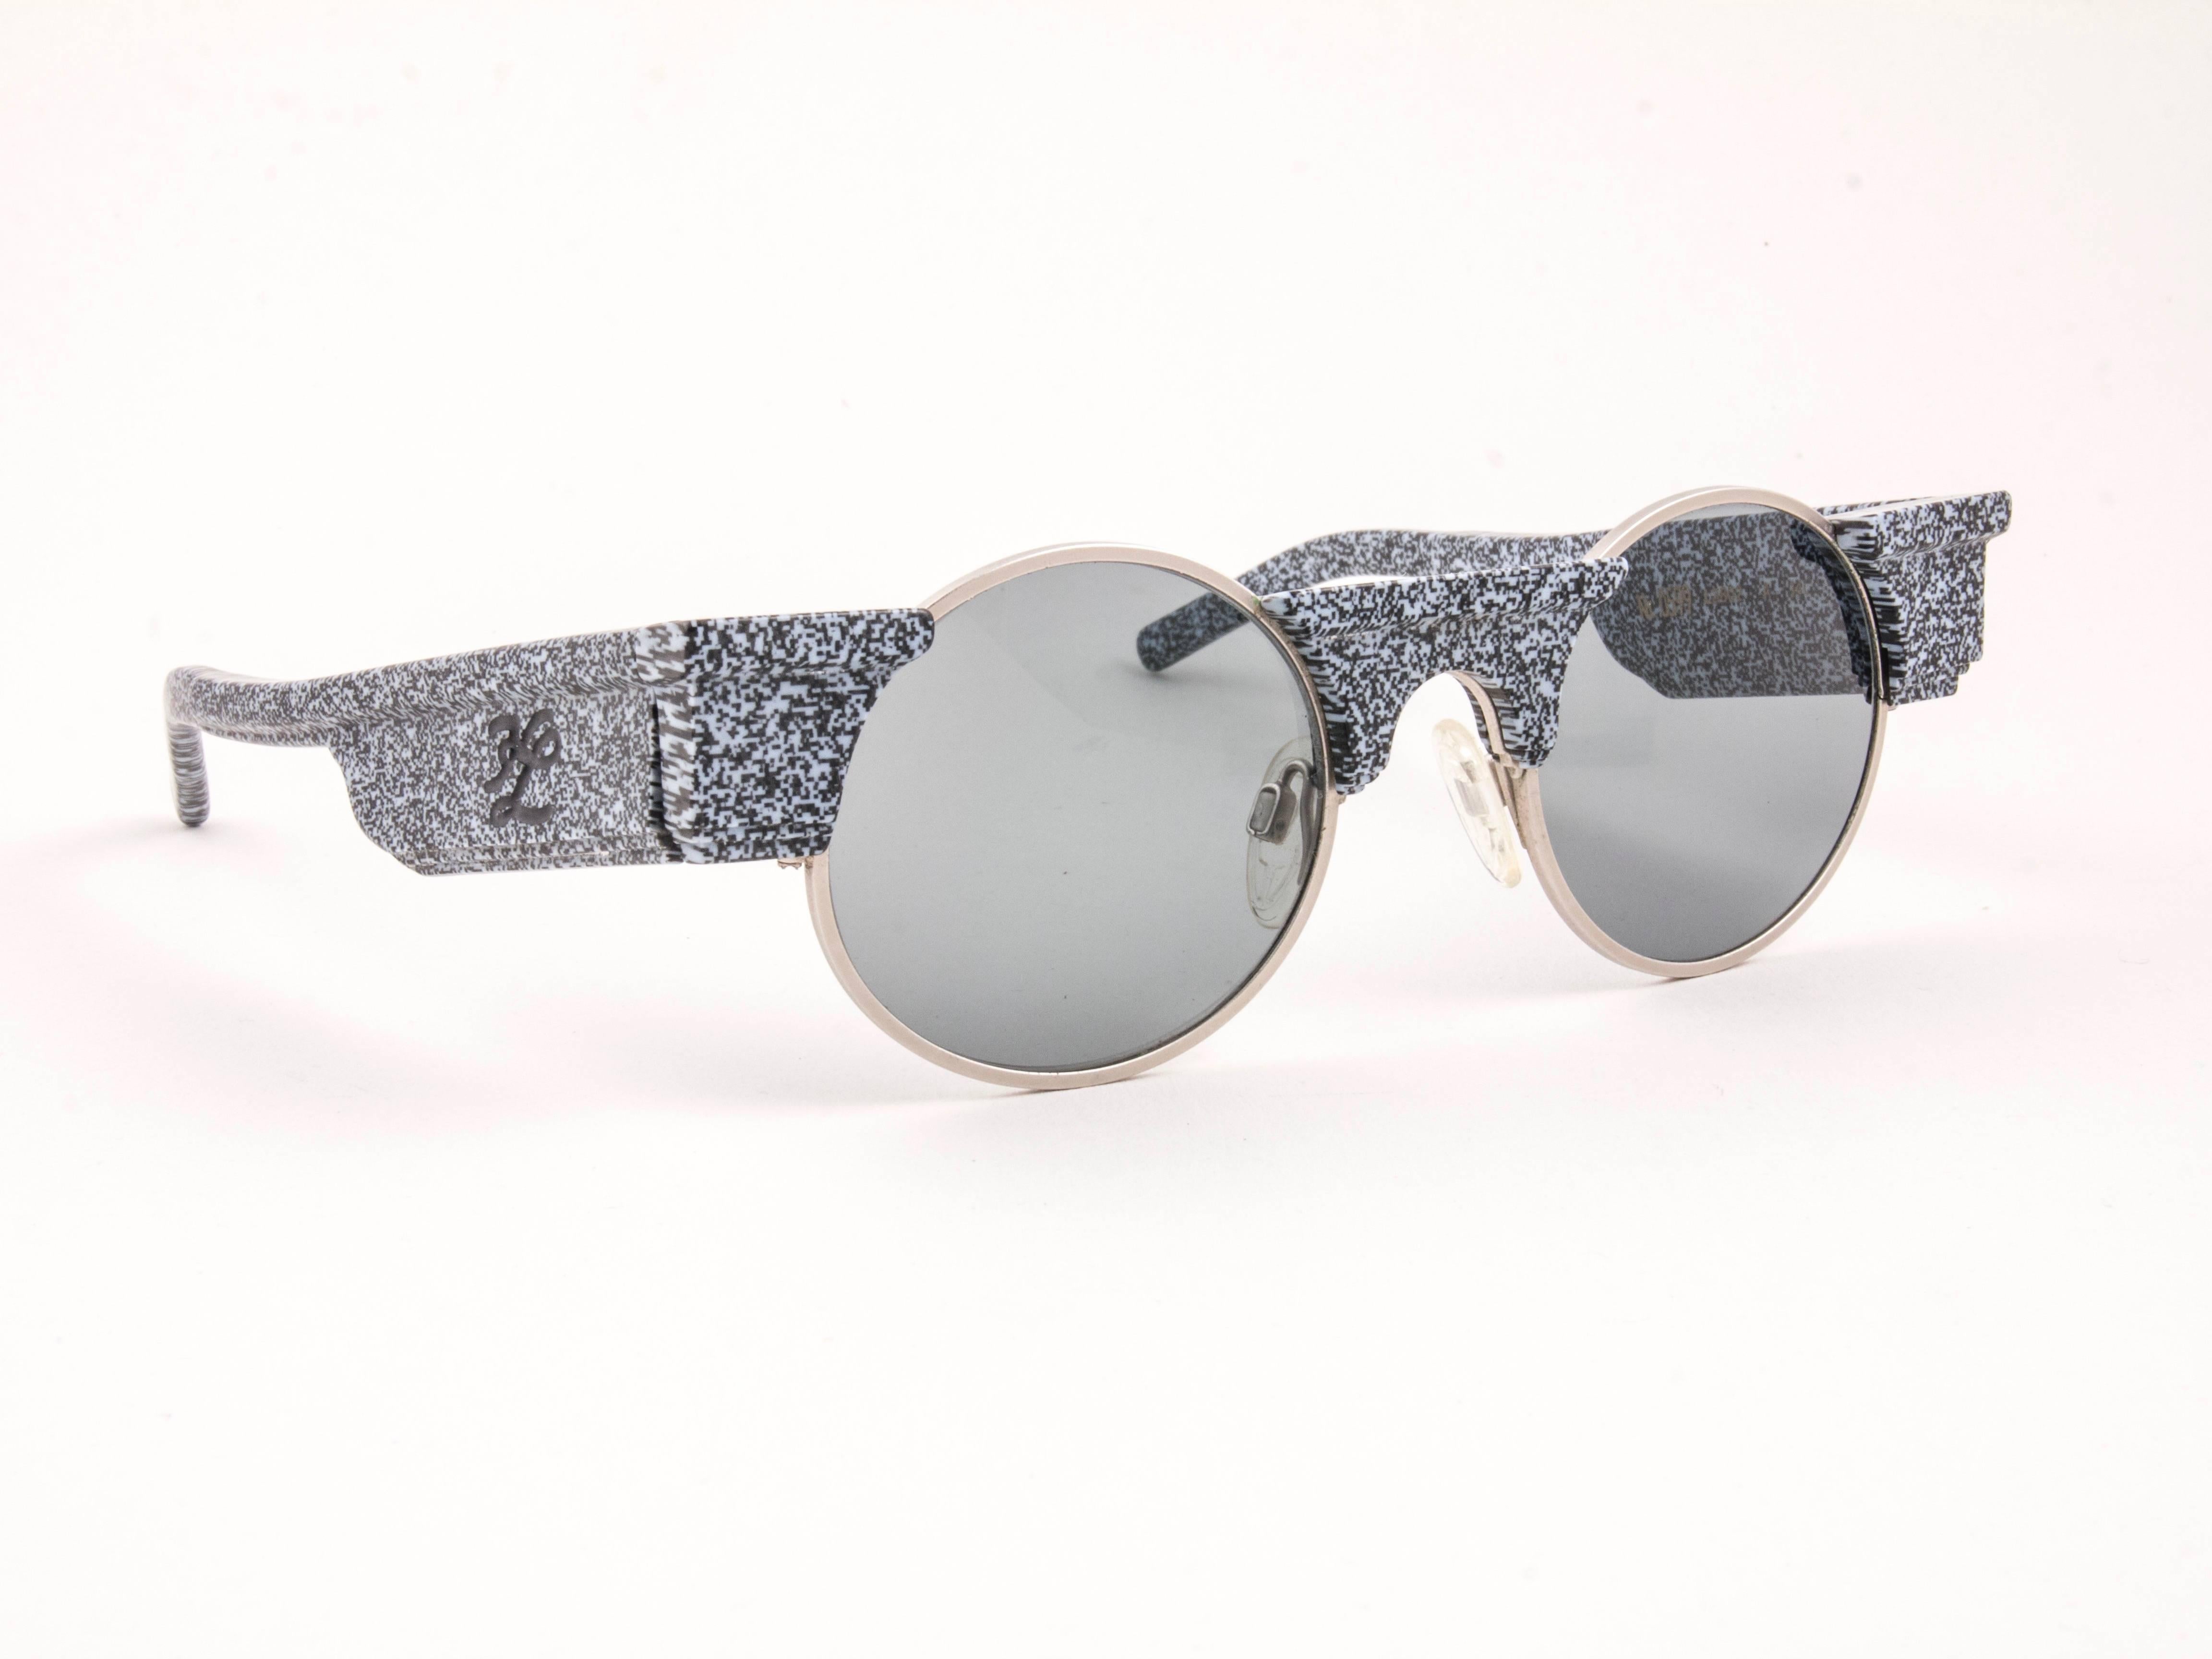 Neu Vintage Karl Lagerfeld Runde graue Marmor 80er Jahre Made In Germany Sonnenbrille (Grau)